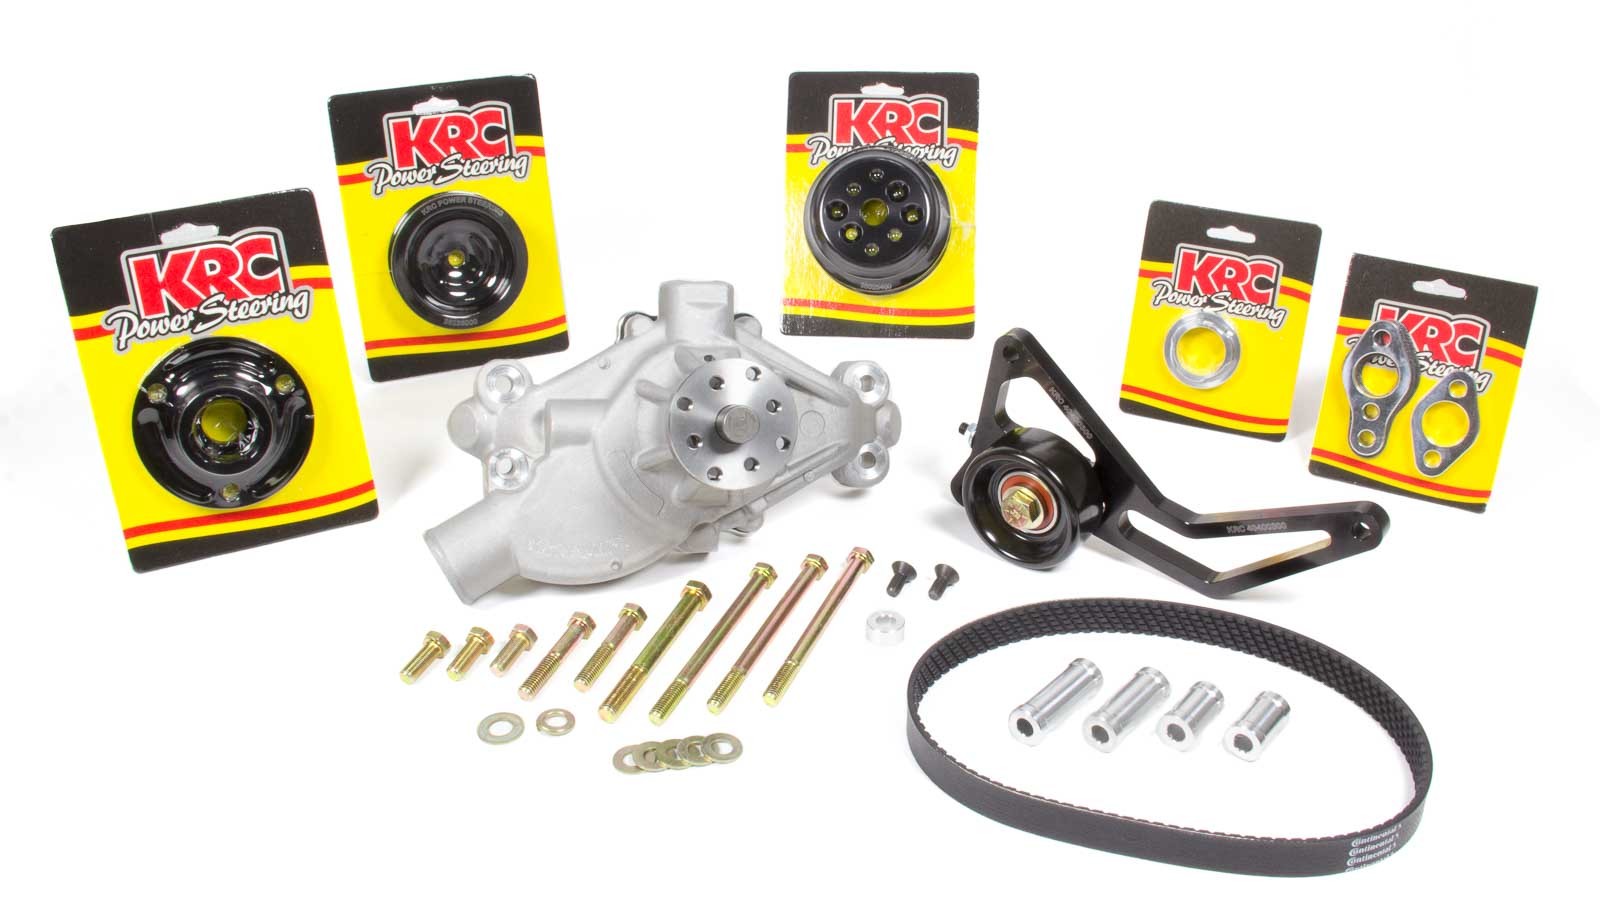 KRC Power Steering KIT16322600 Pulley Kit, Pro-Series, 6-Rib Serpentine, Bellhousing Mount, Aluminum, Black Anodized, Small Block Chevy, Kit